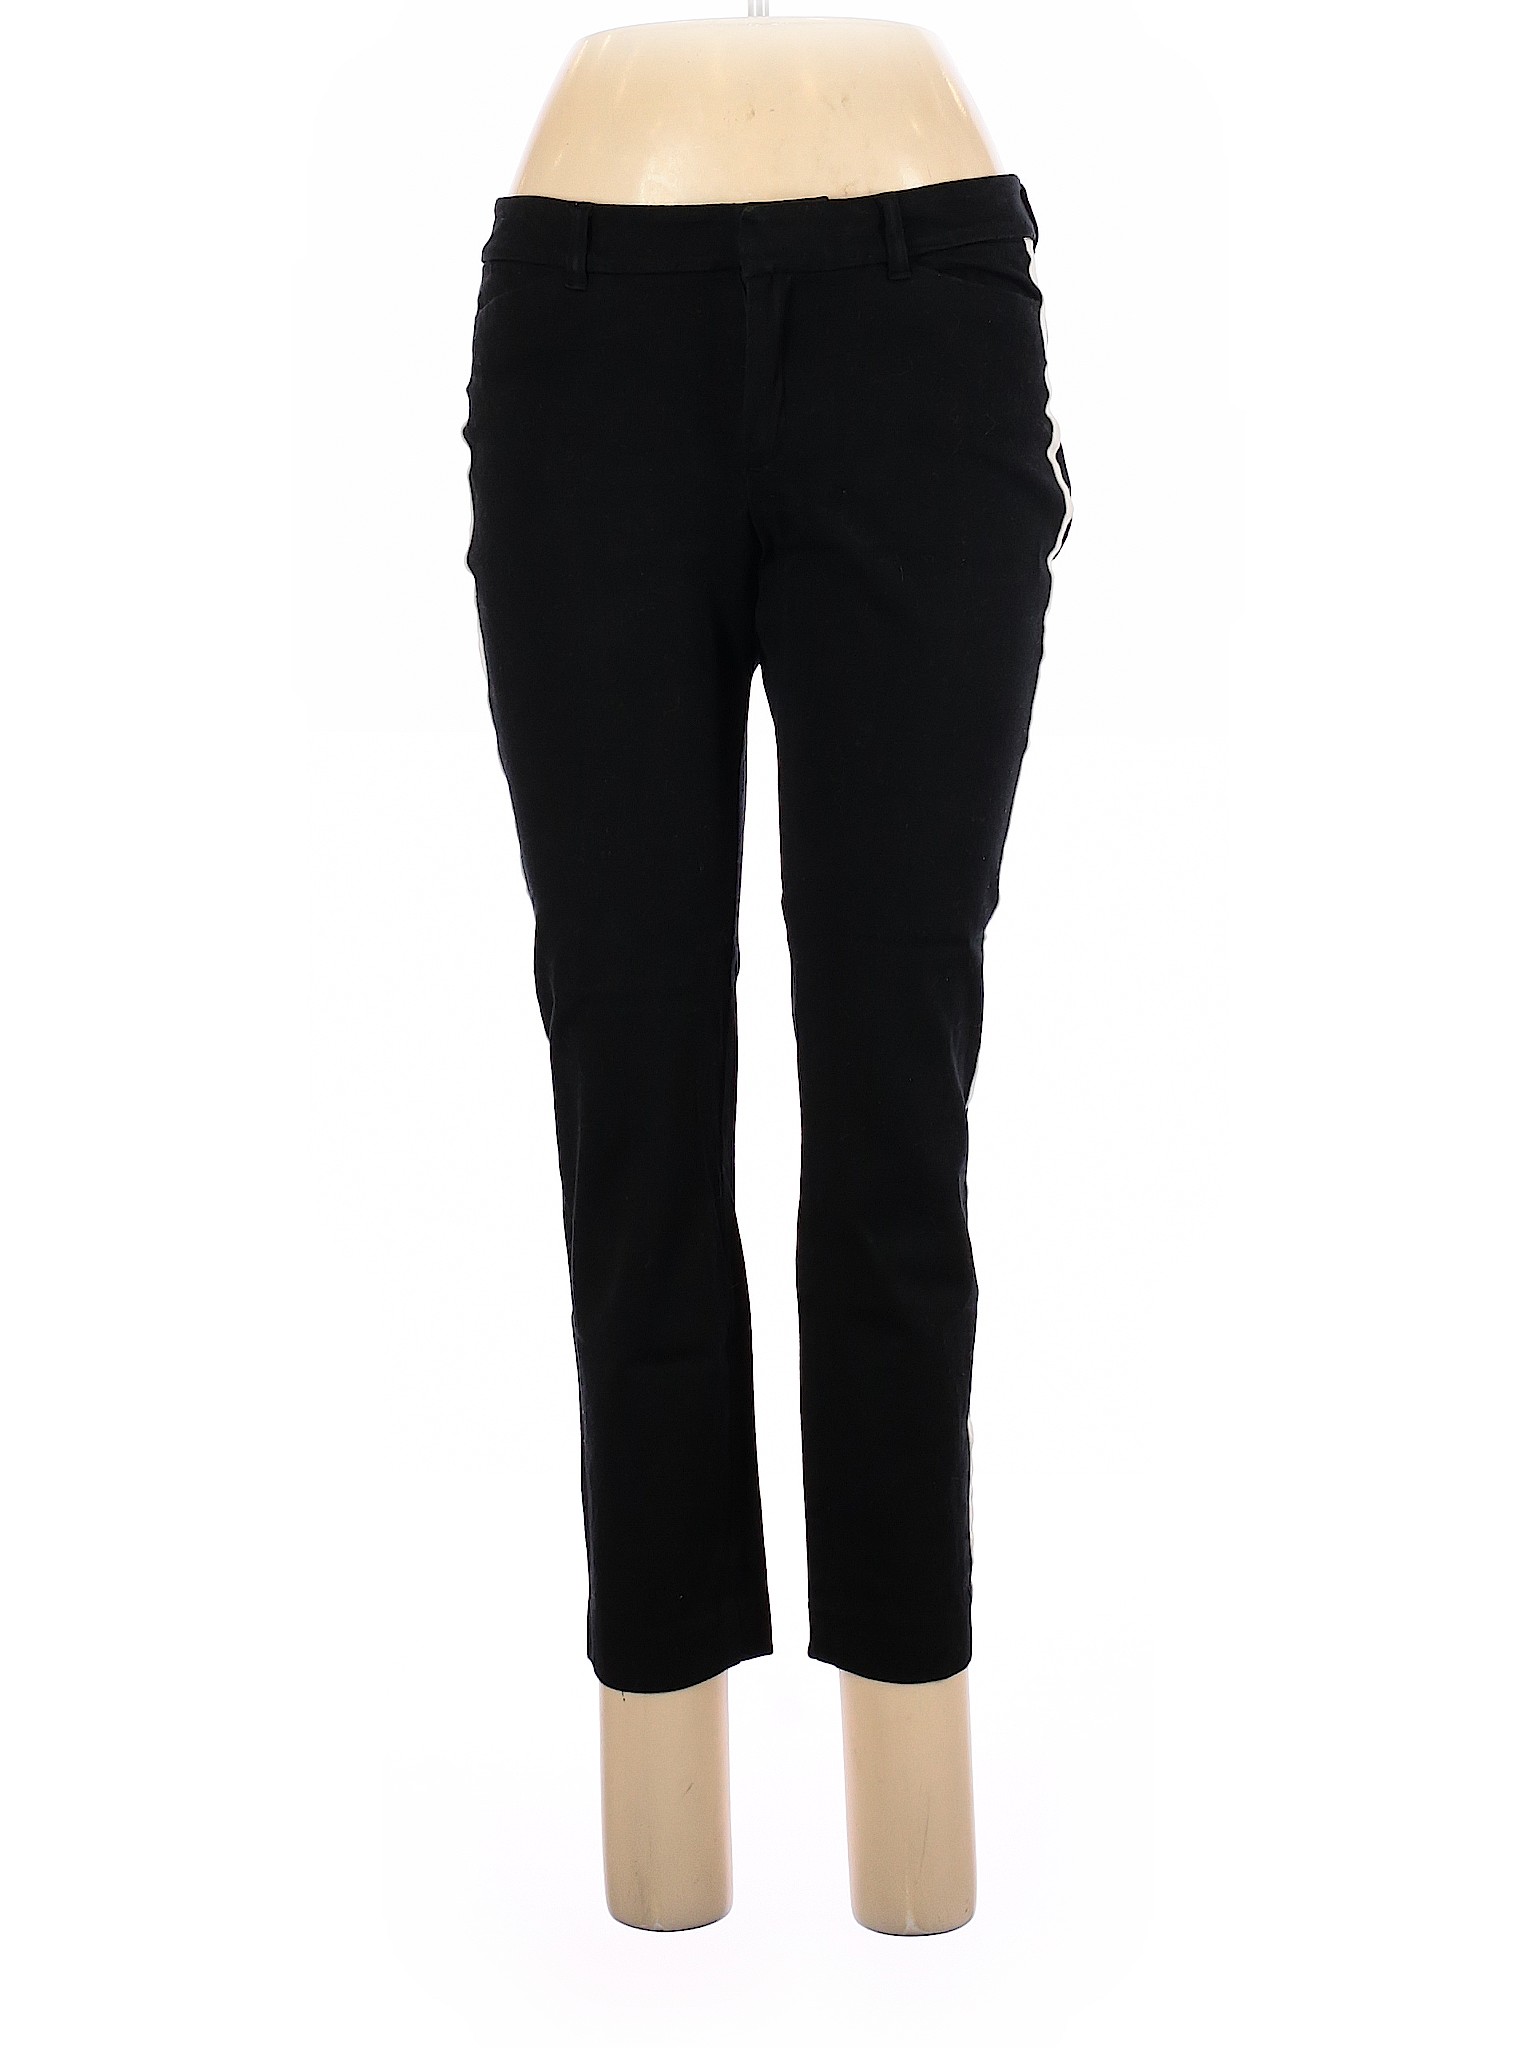 Old Navy Women Black Casual Pants 10 | eBay